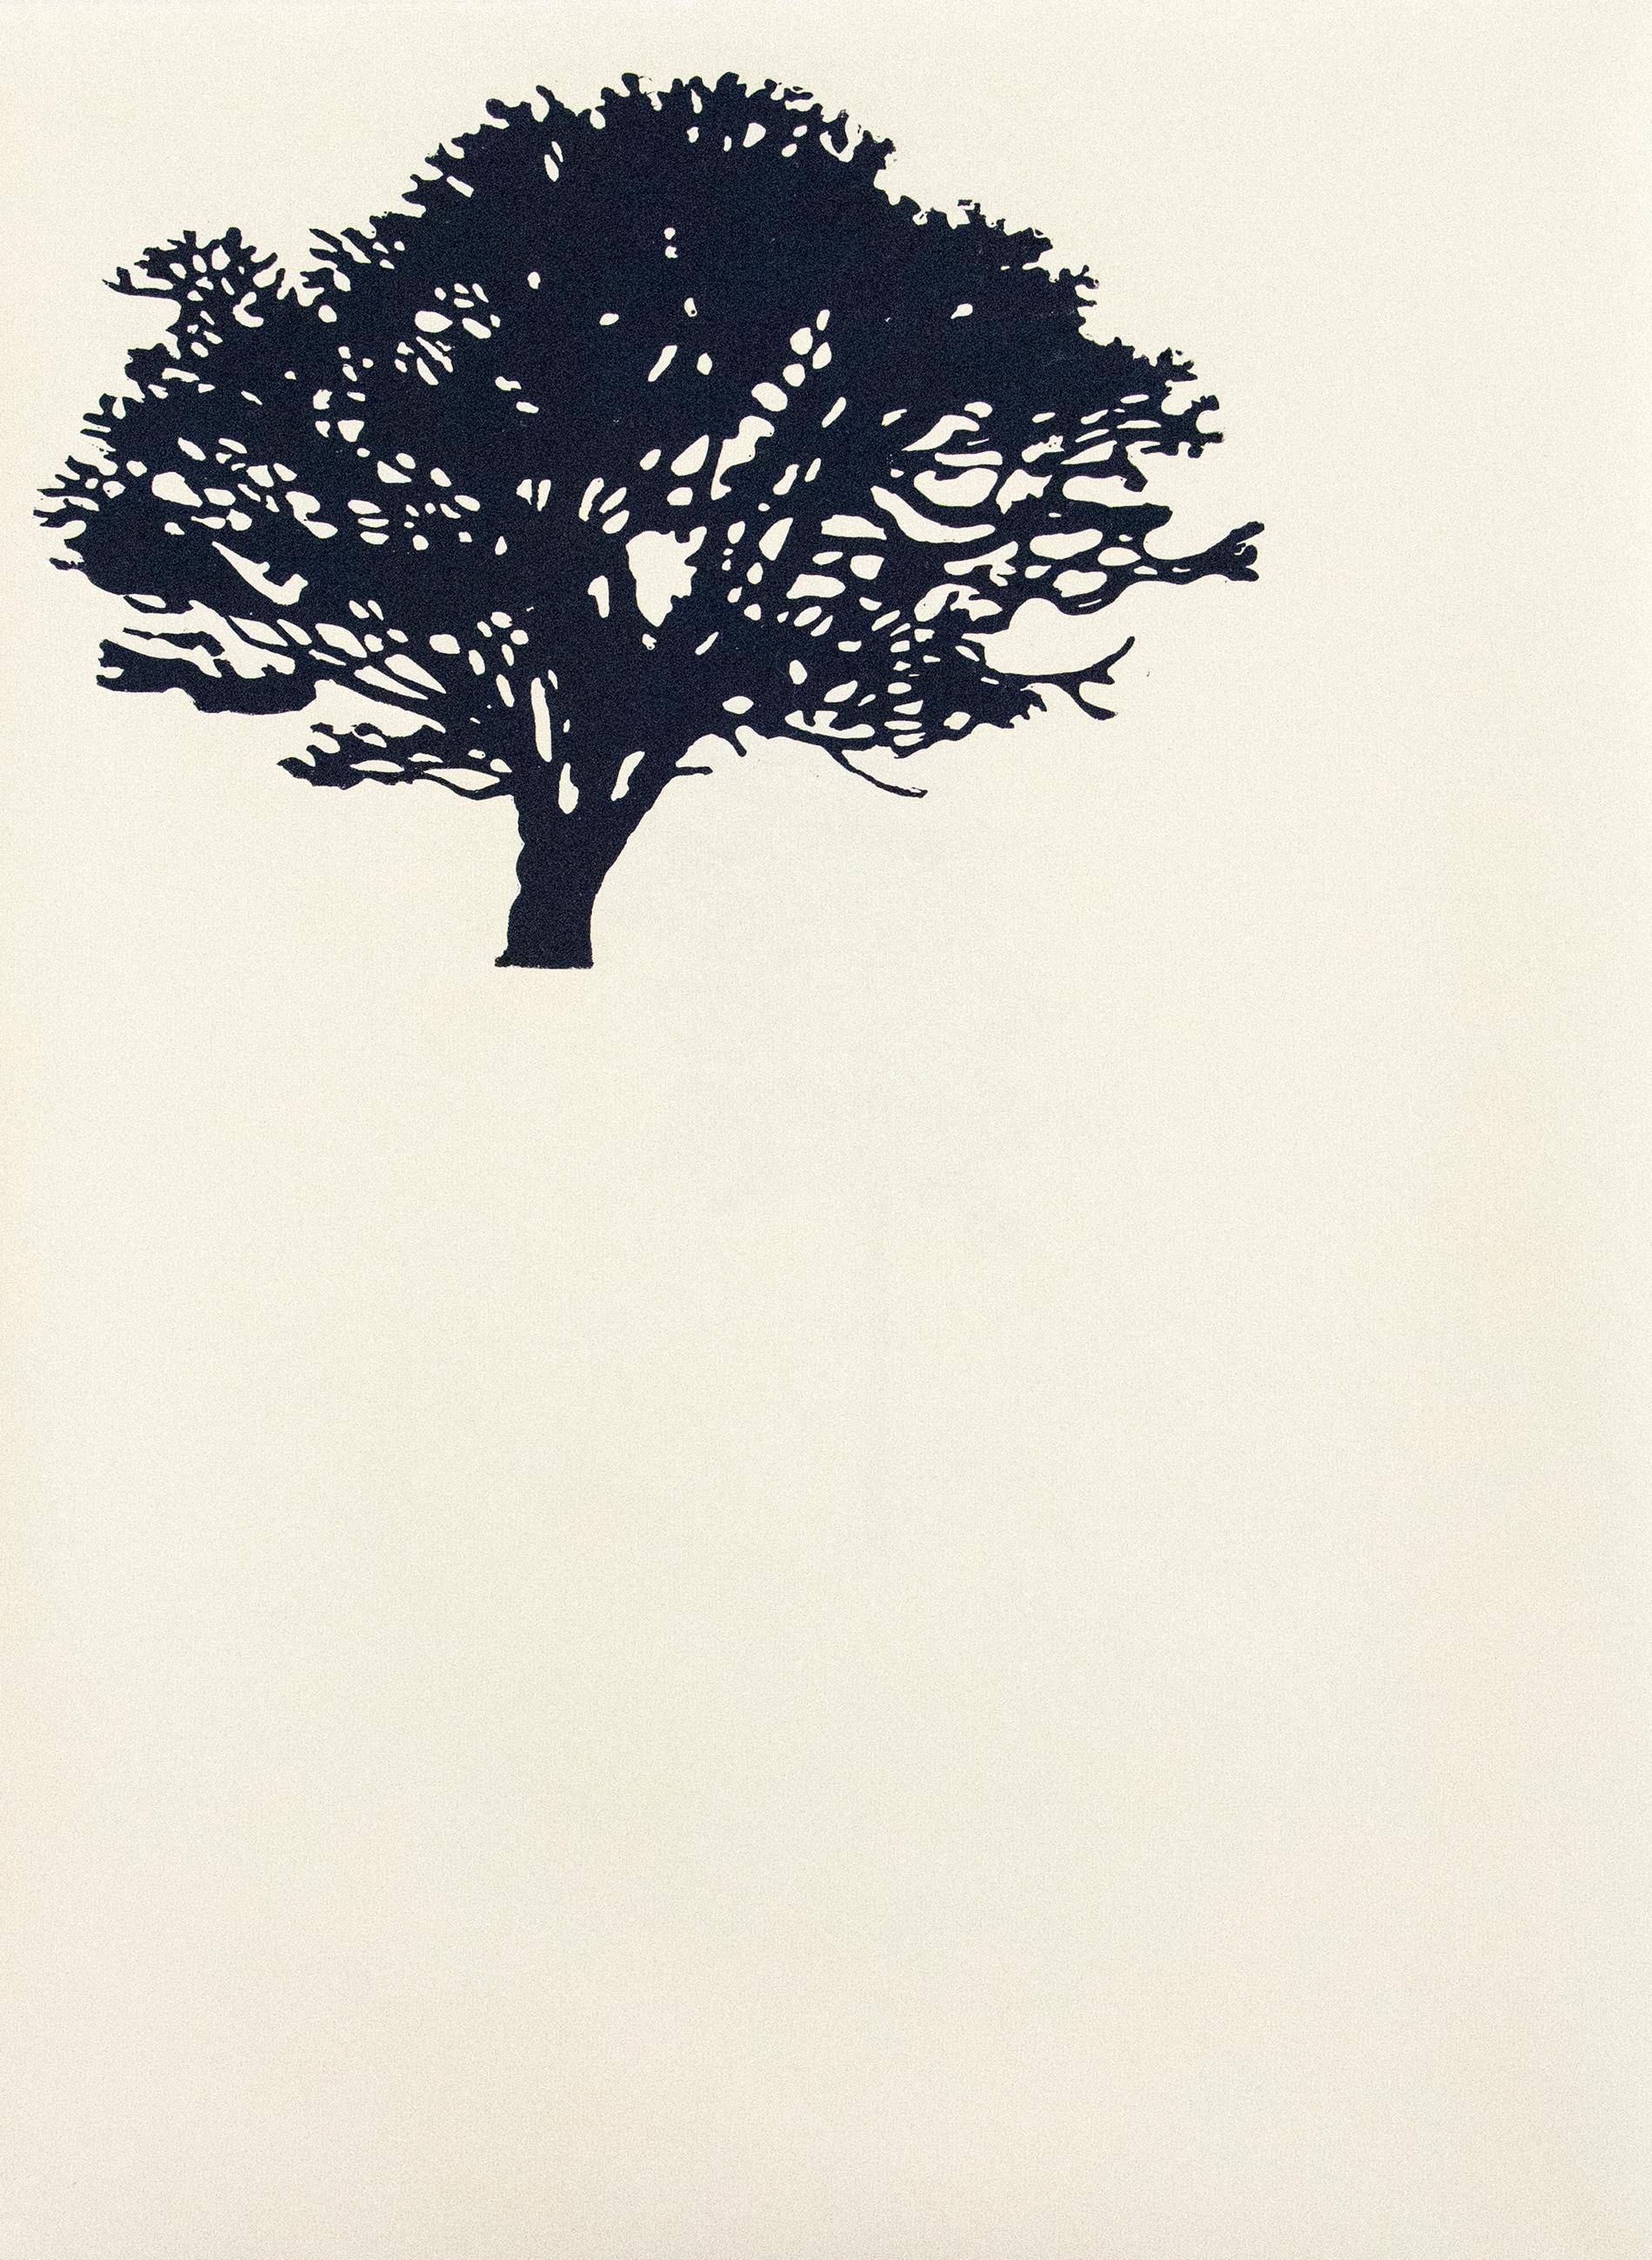 Der Wald  8/12 - portfolio of 9 woodblock prints 2